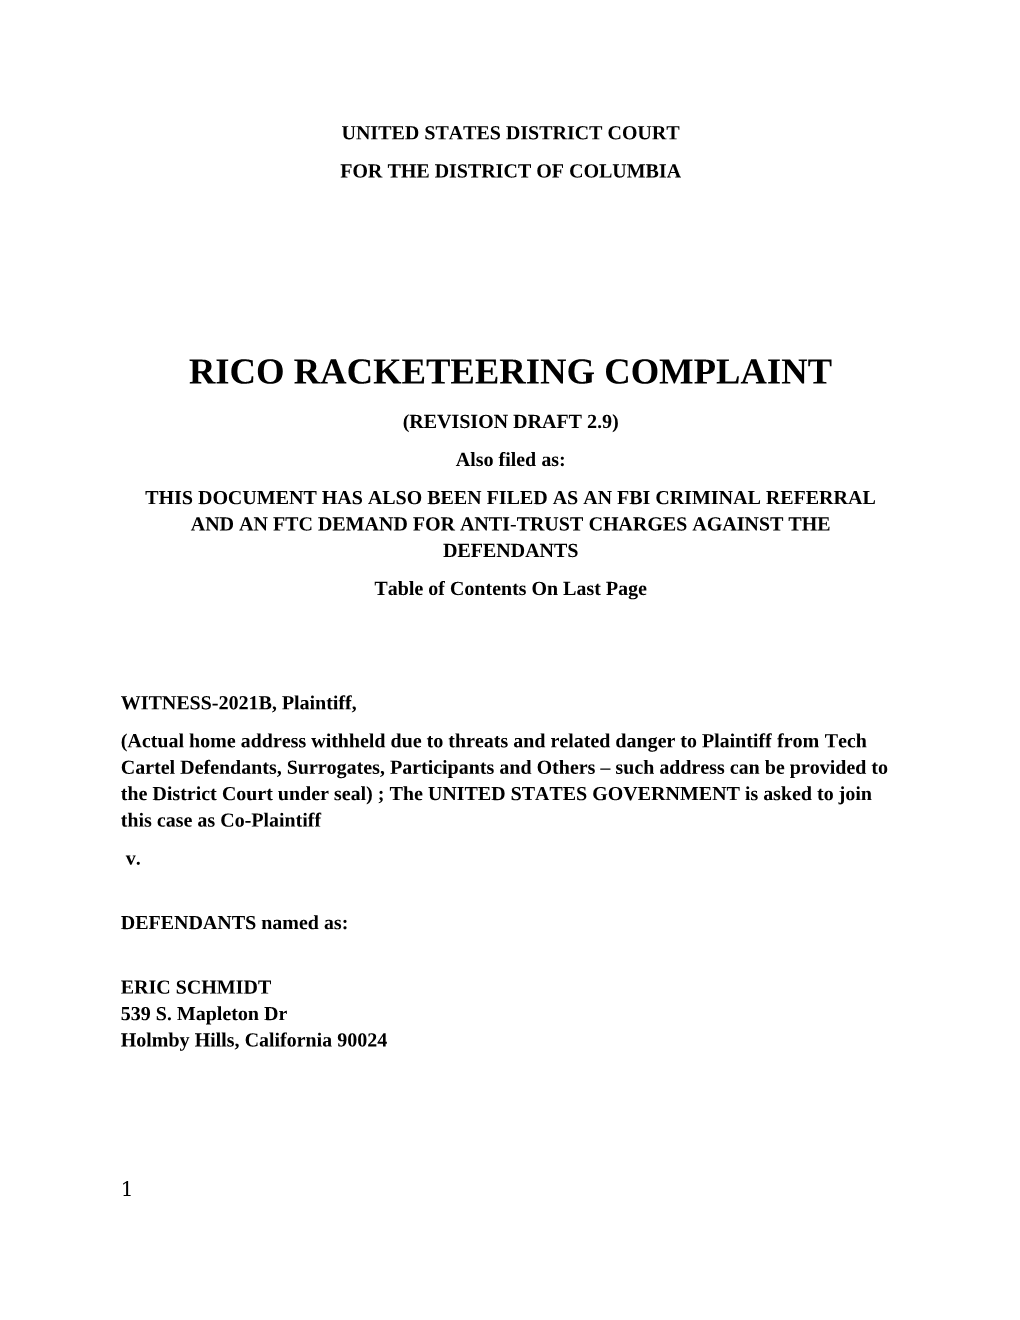 Rico Racketeering Complaint